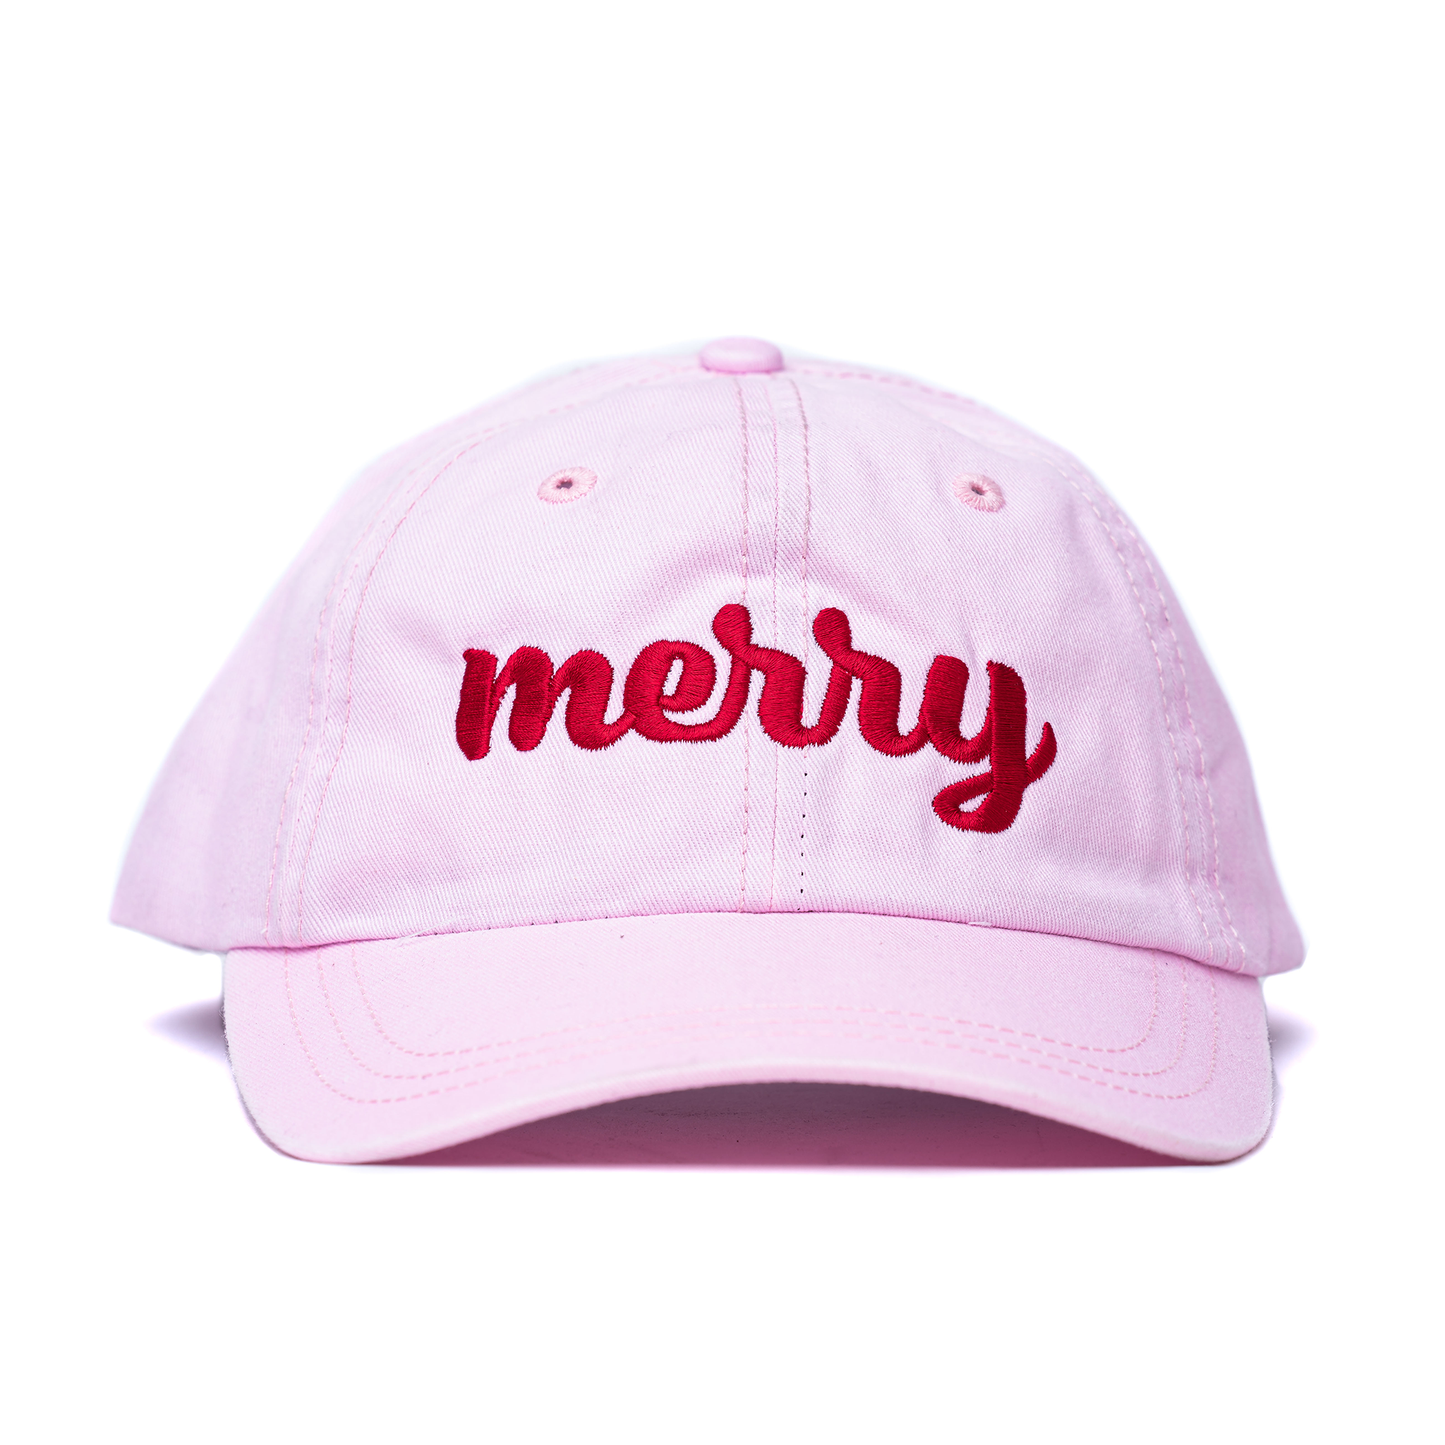 Merry (Red, Bold Cursive) - Baseball Hat (Light Pink)